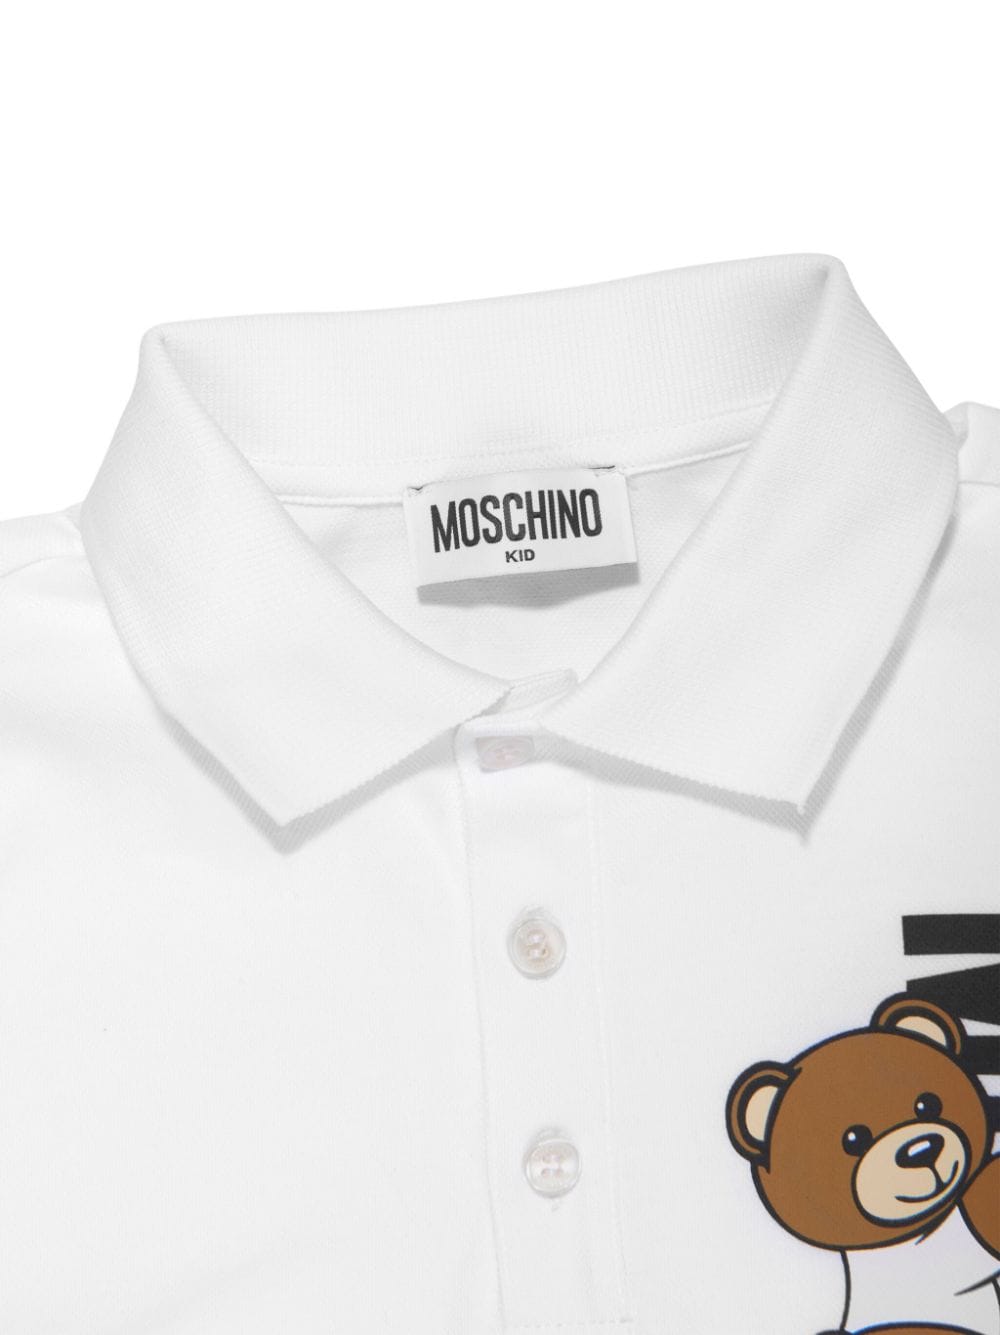 White polo shirt for boys with logo